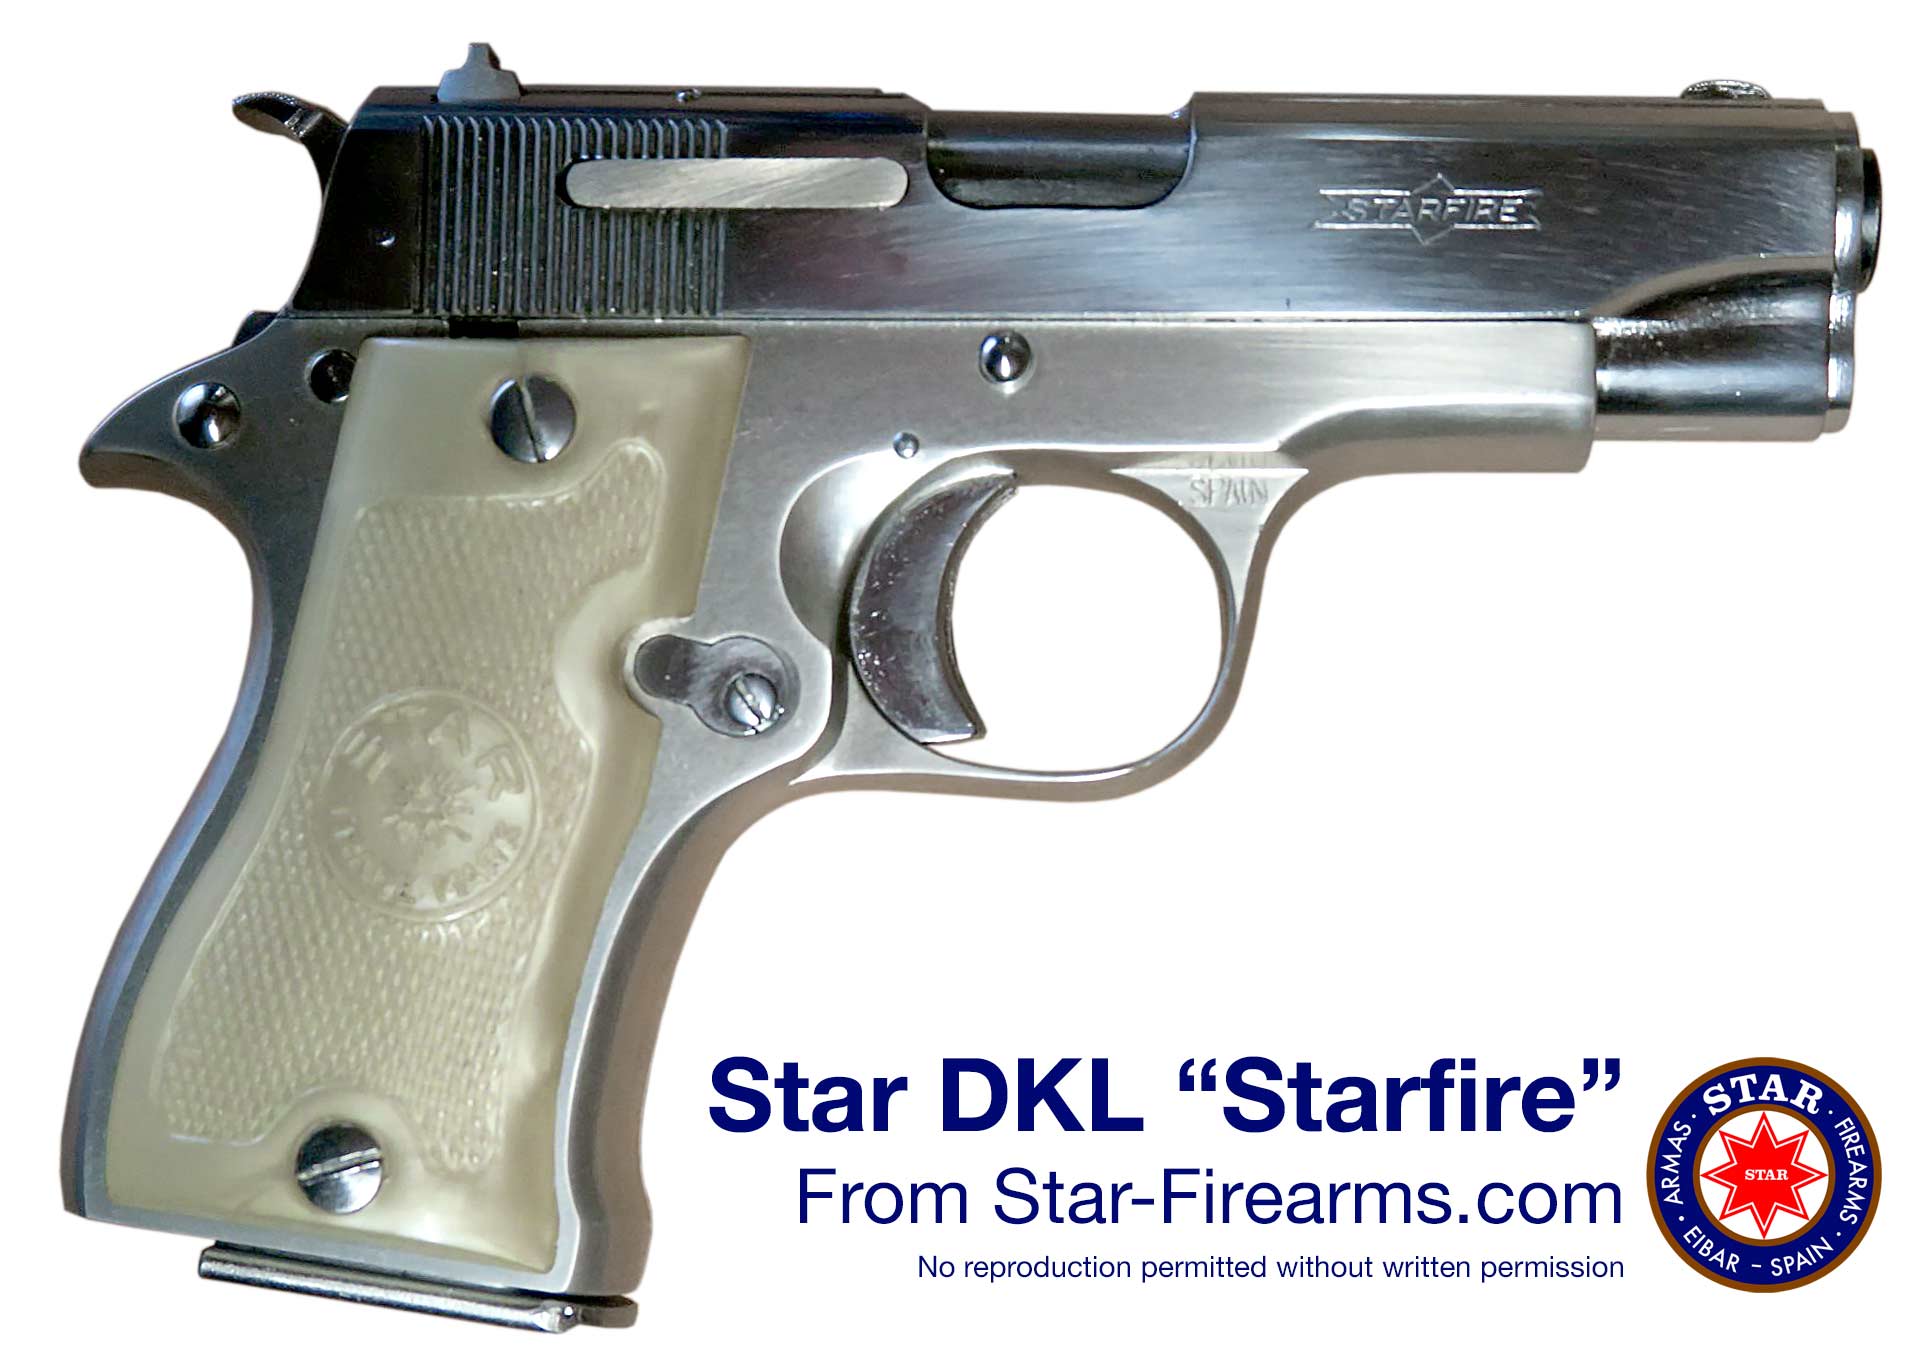 A model DKL Starfire pistol.